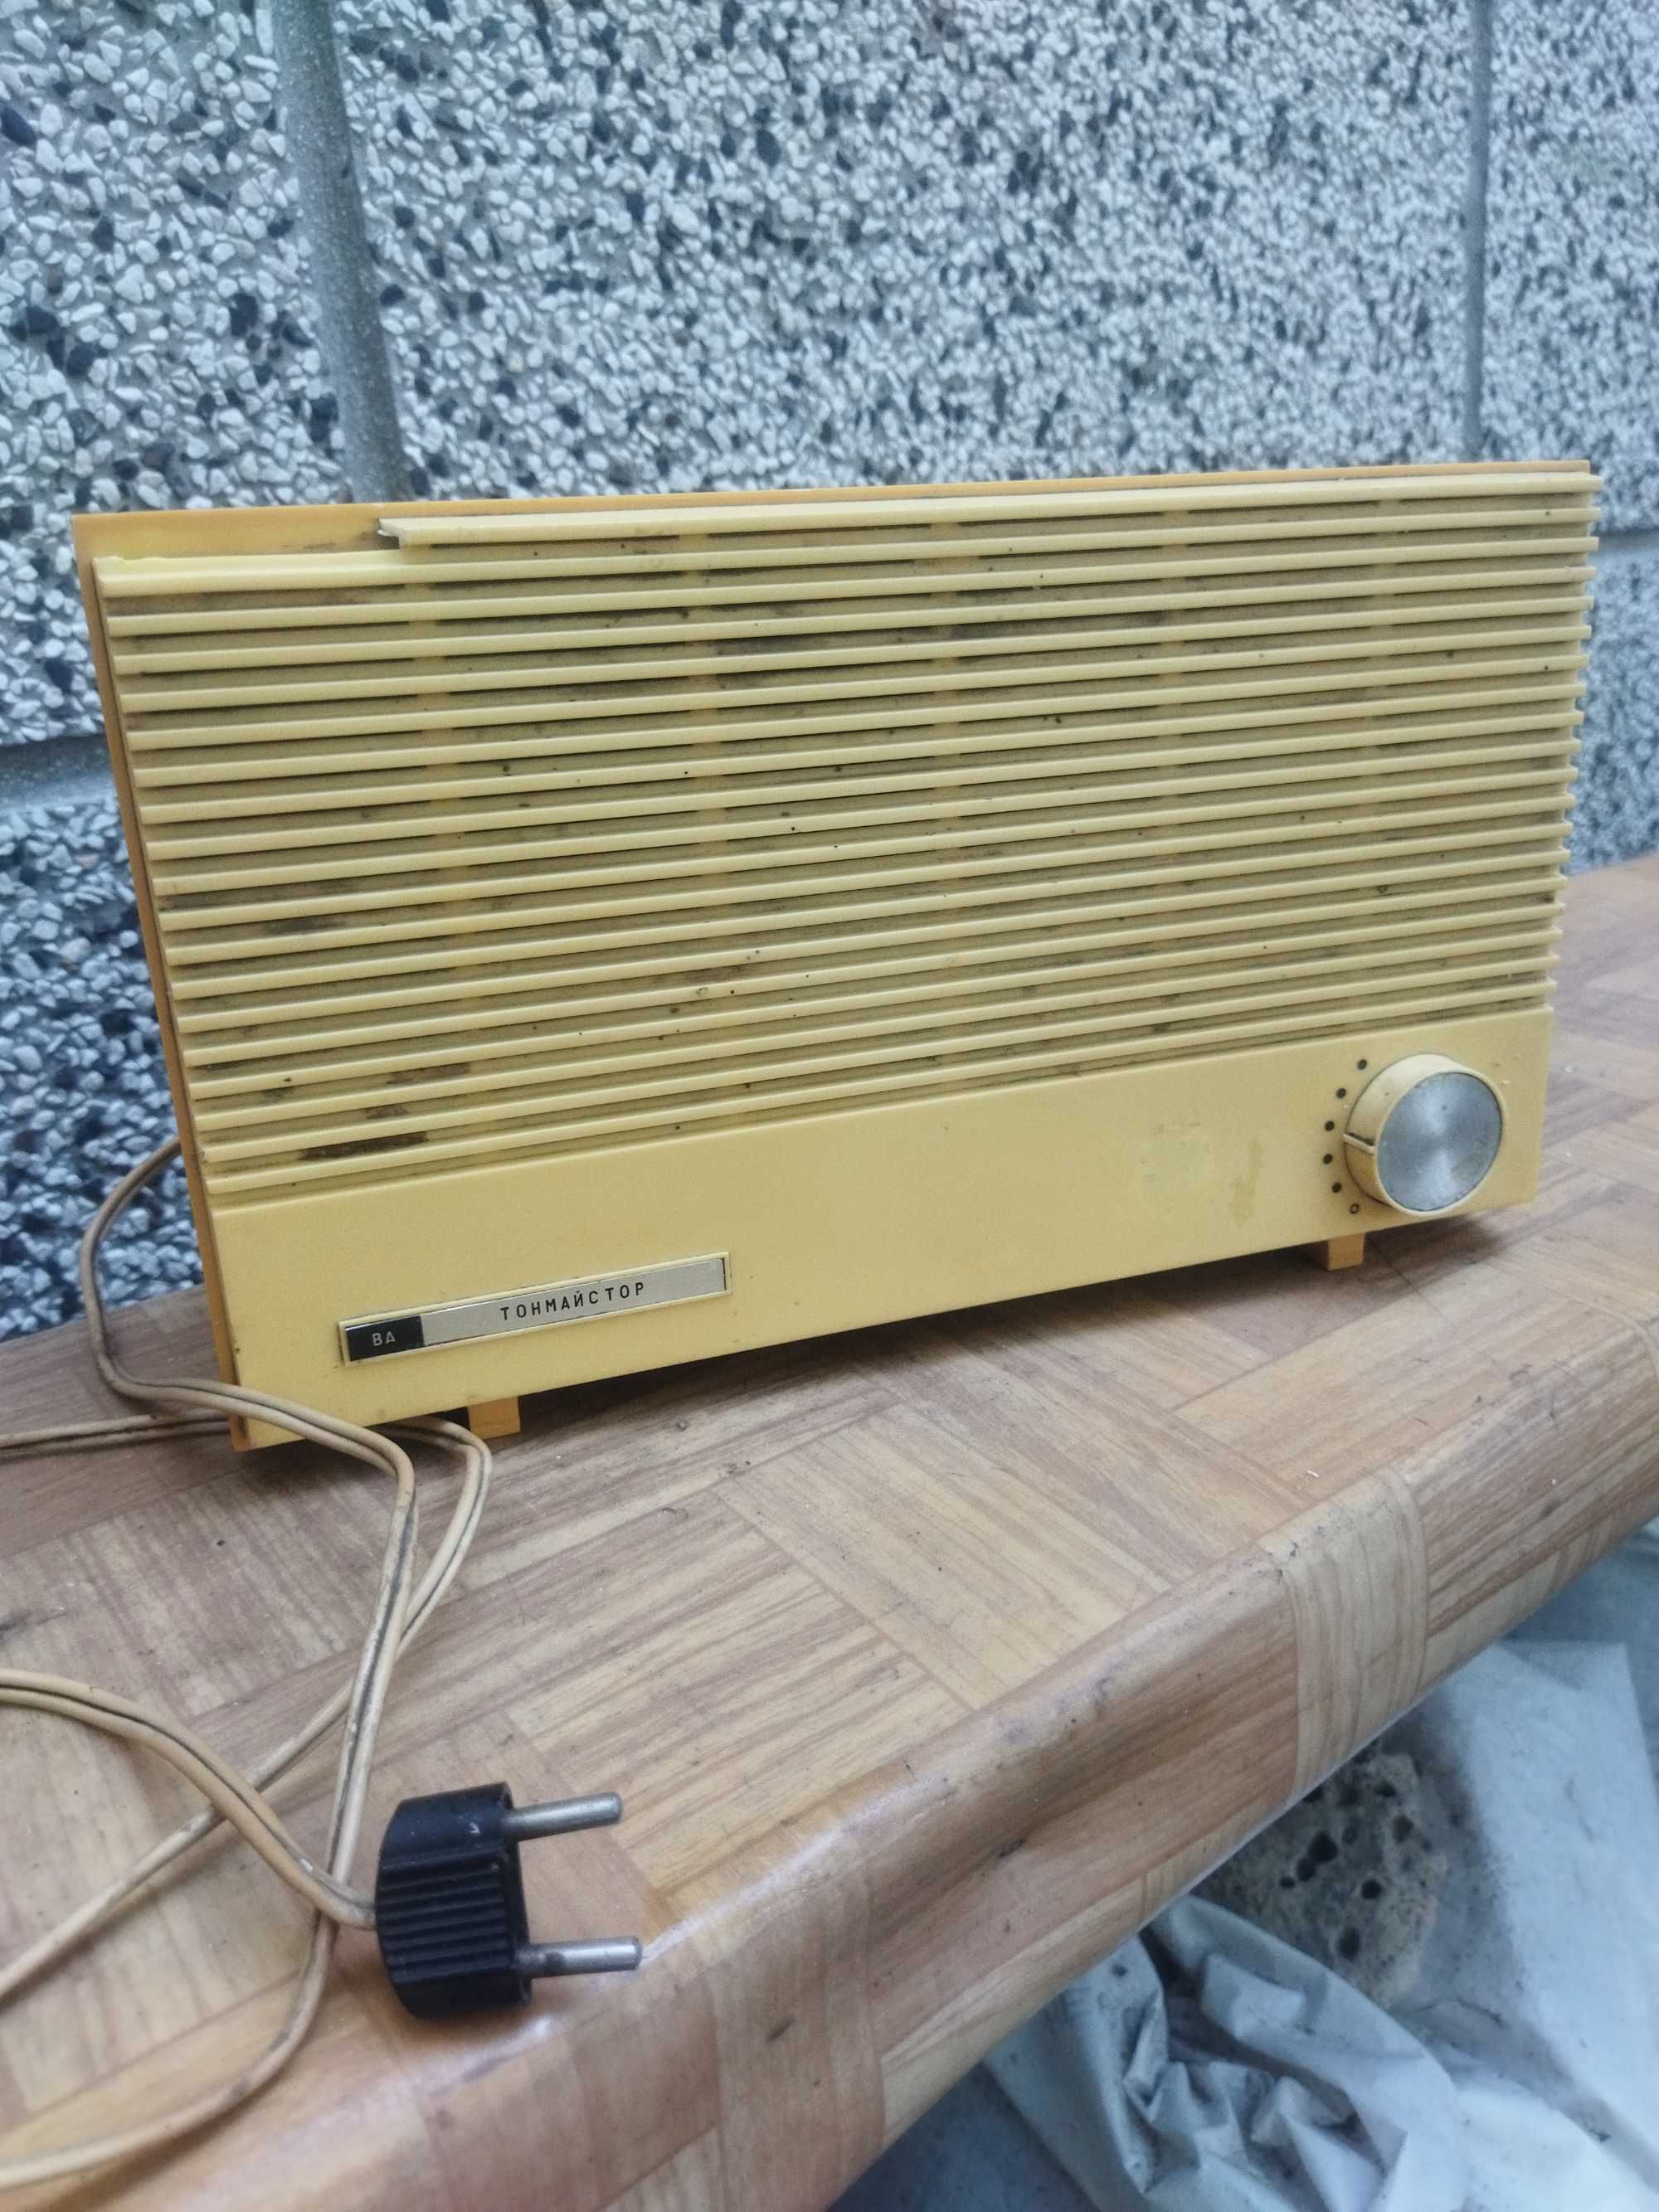 Радиоточка, радио, високоговорител абонатен Тонмайстор тип ва03-2